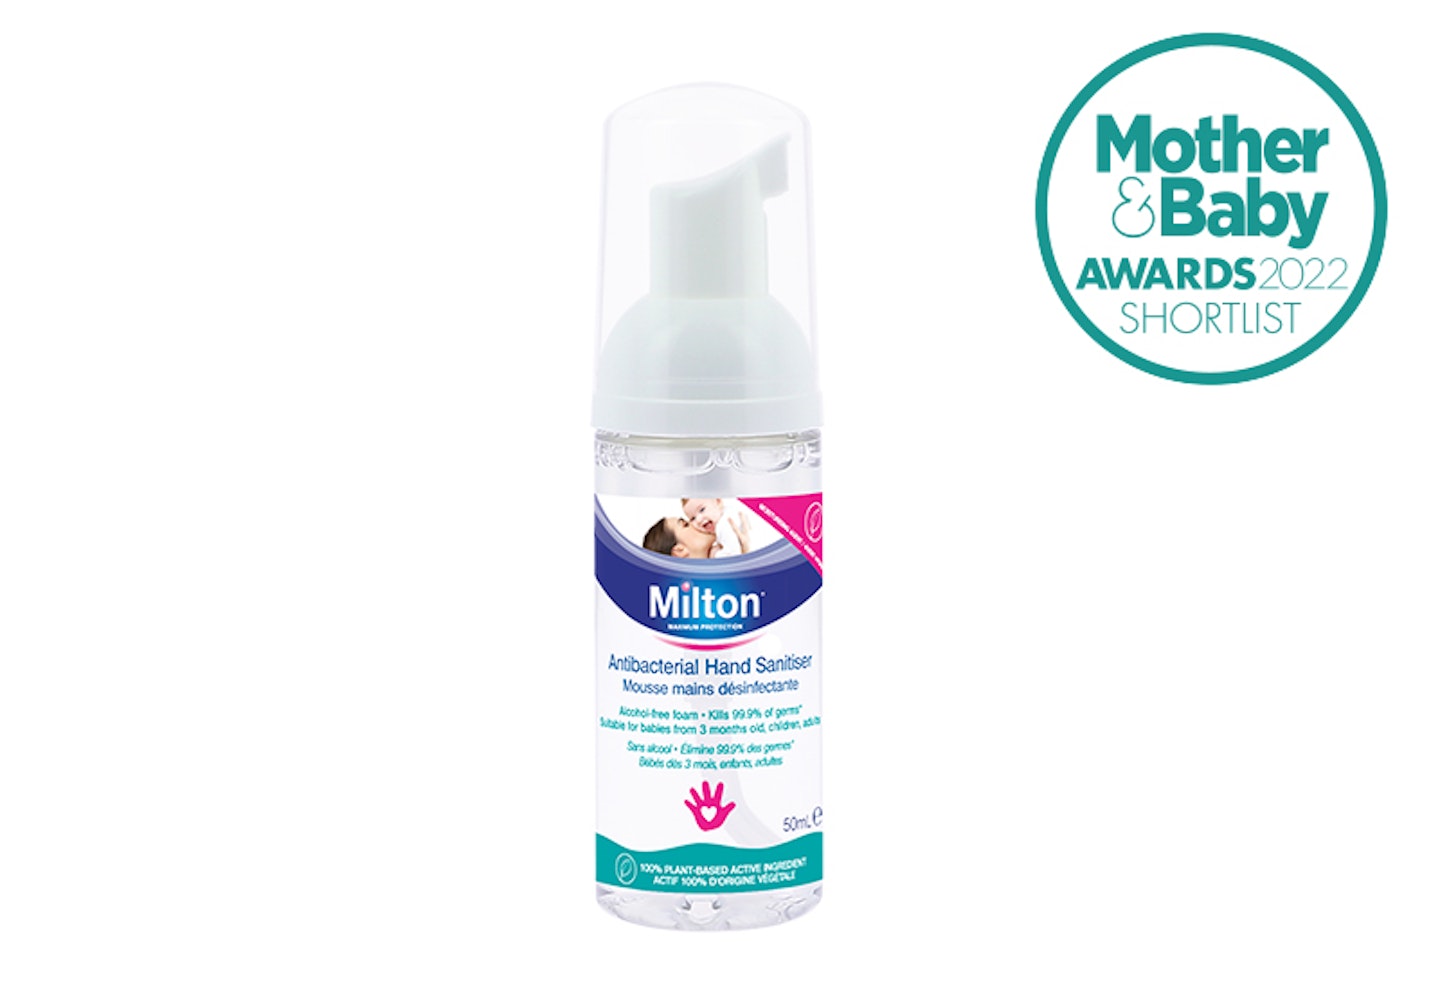 Milton Antibacterial Hand Sanitiser